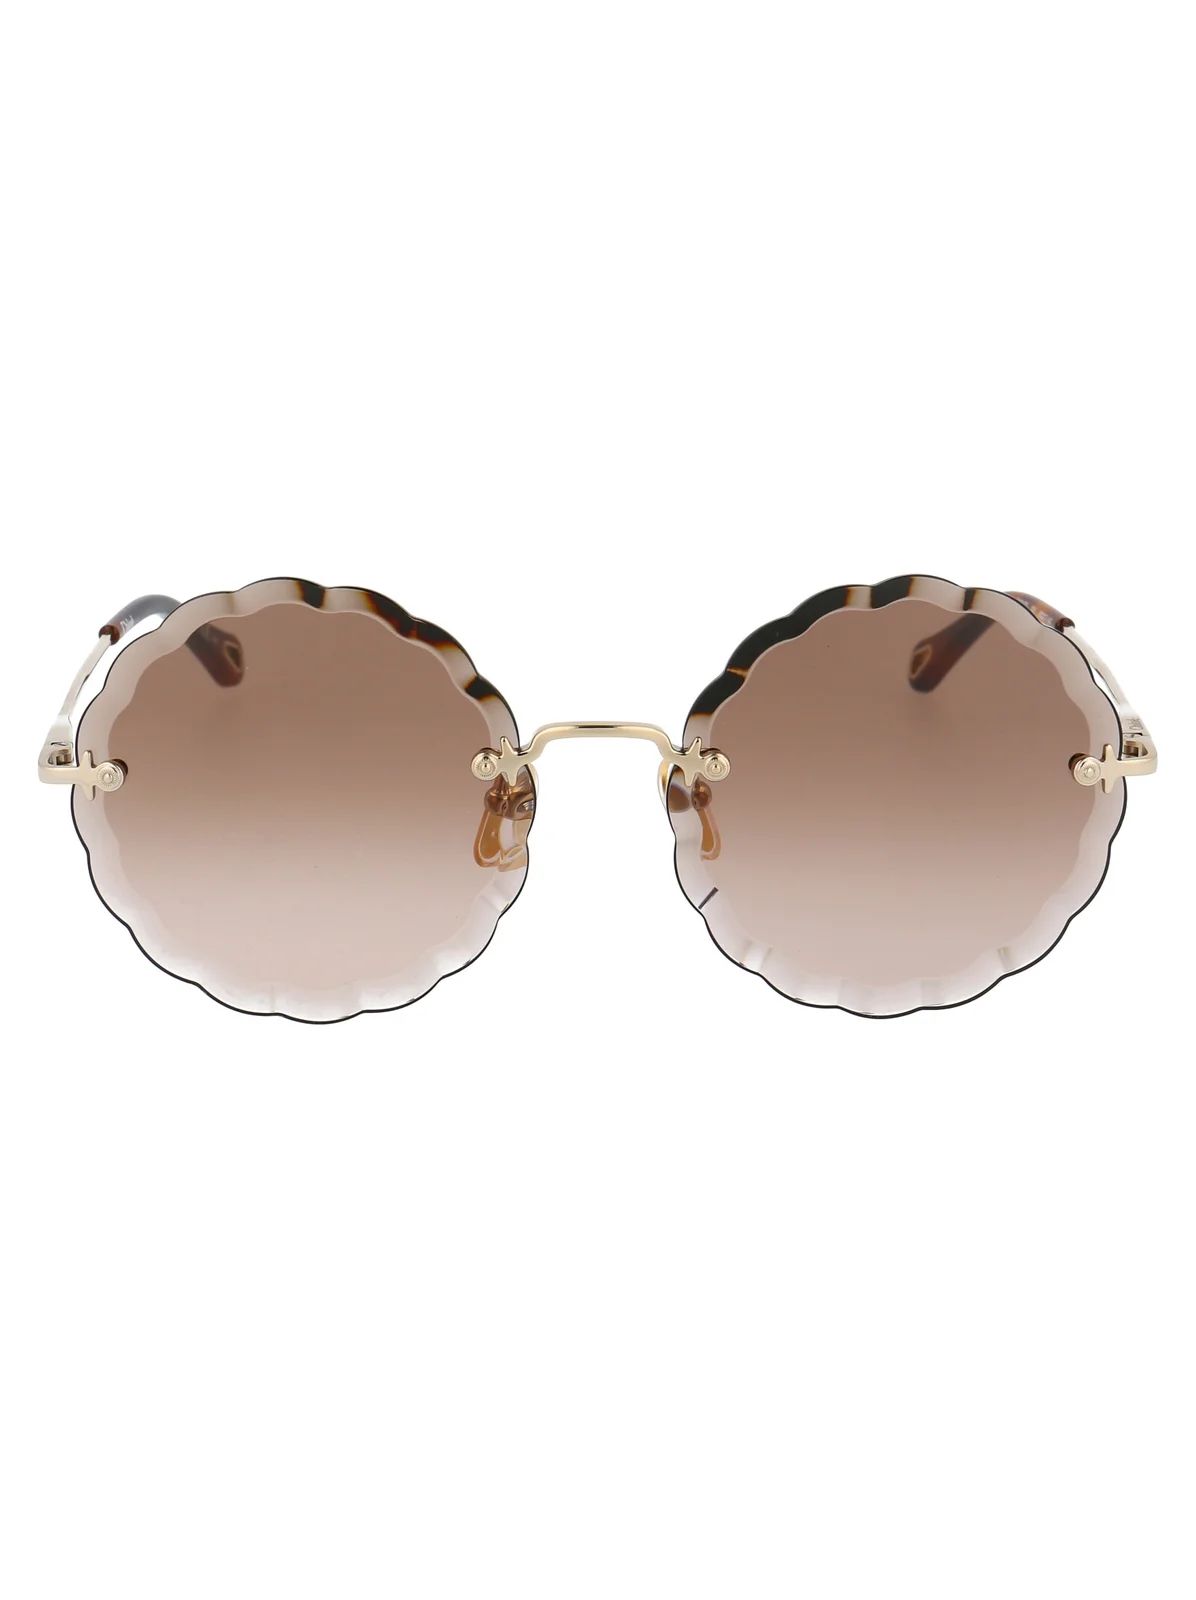 Chloé Eyewear Round Scalloped Frame Sunglasses | Cettire Global